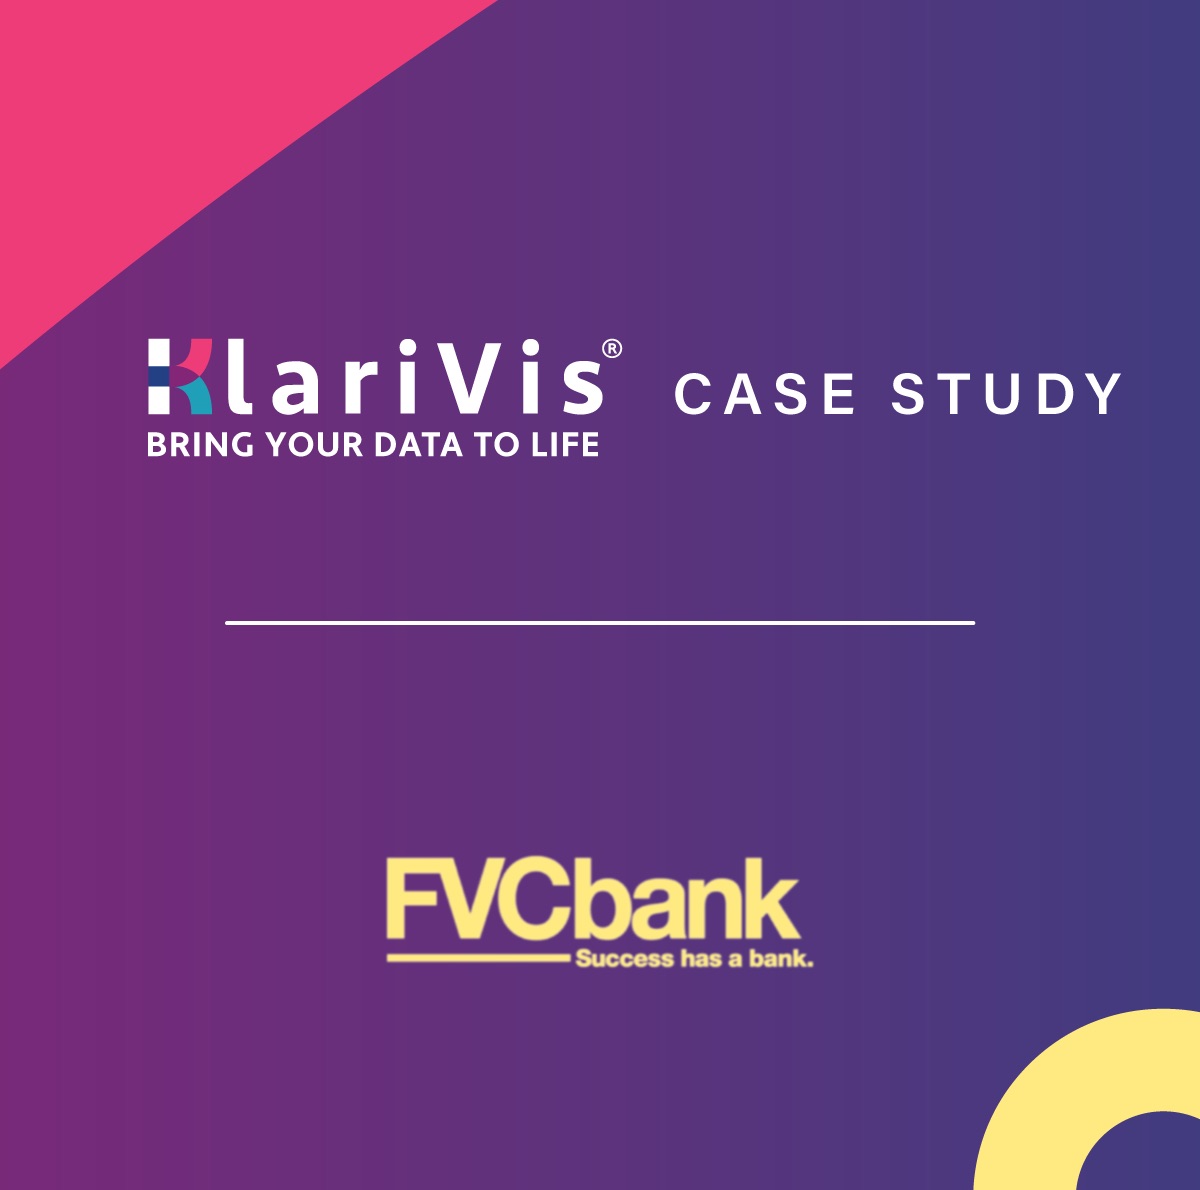 KlariVis Case Study